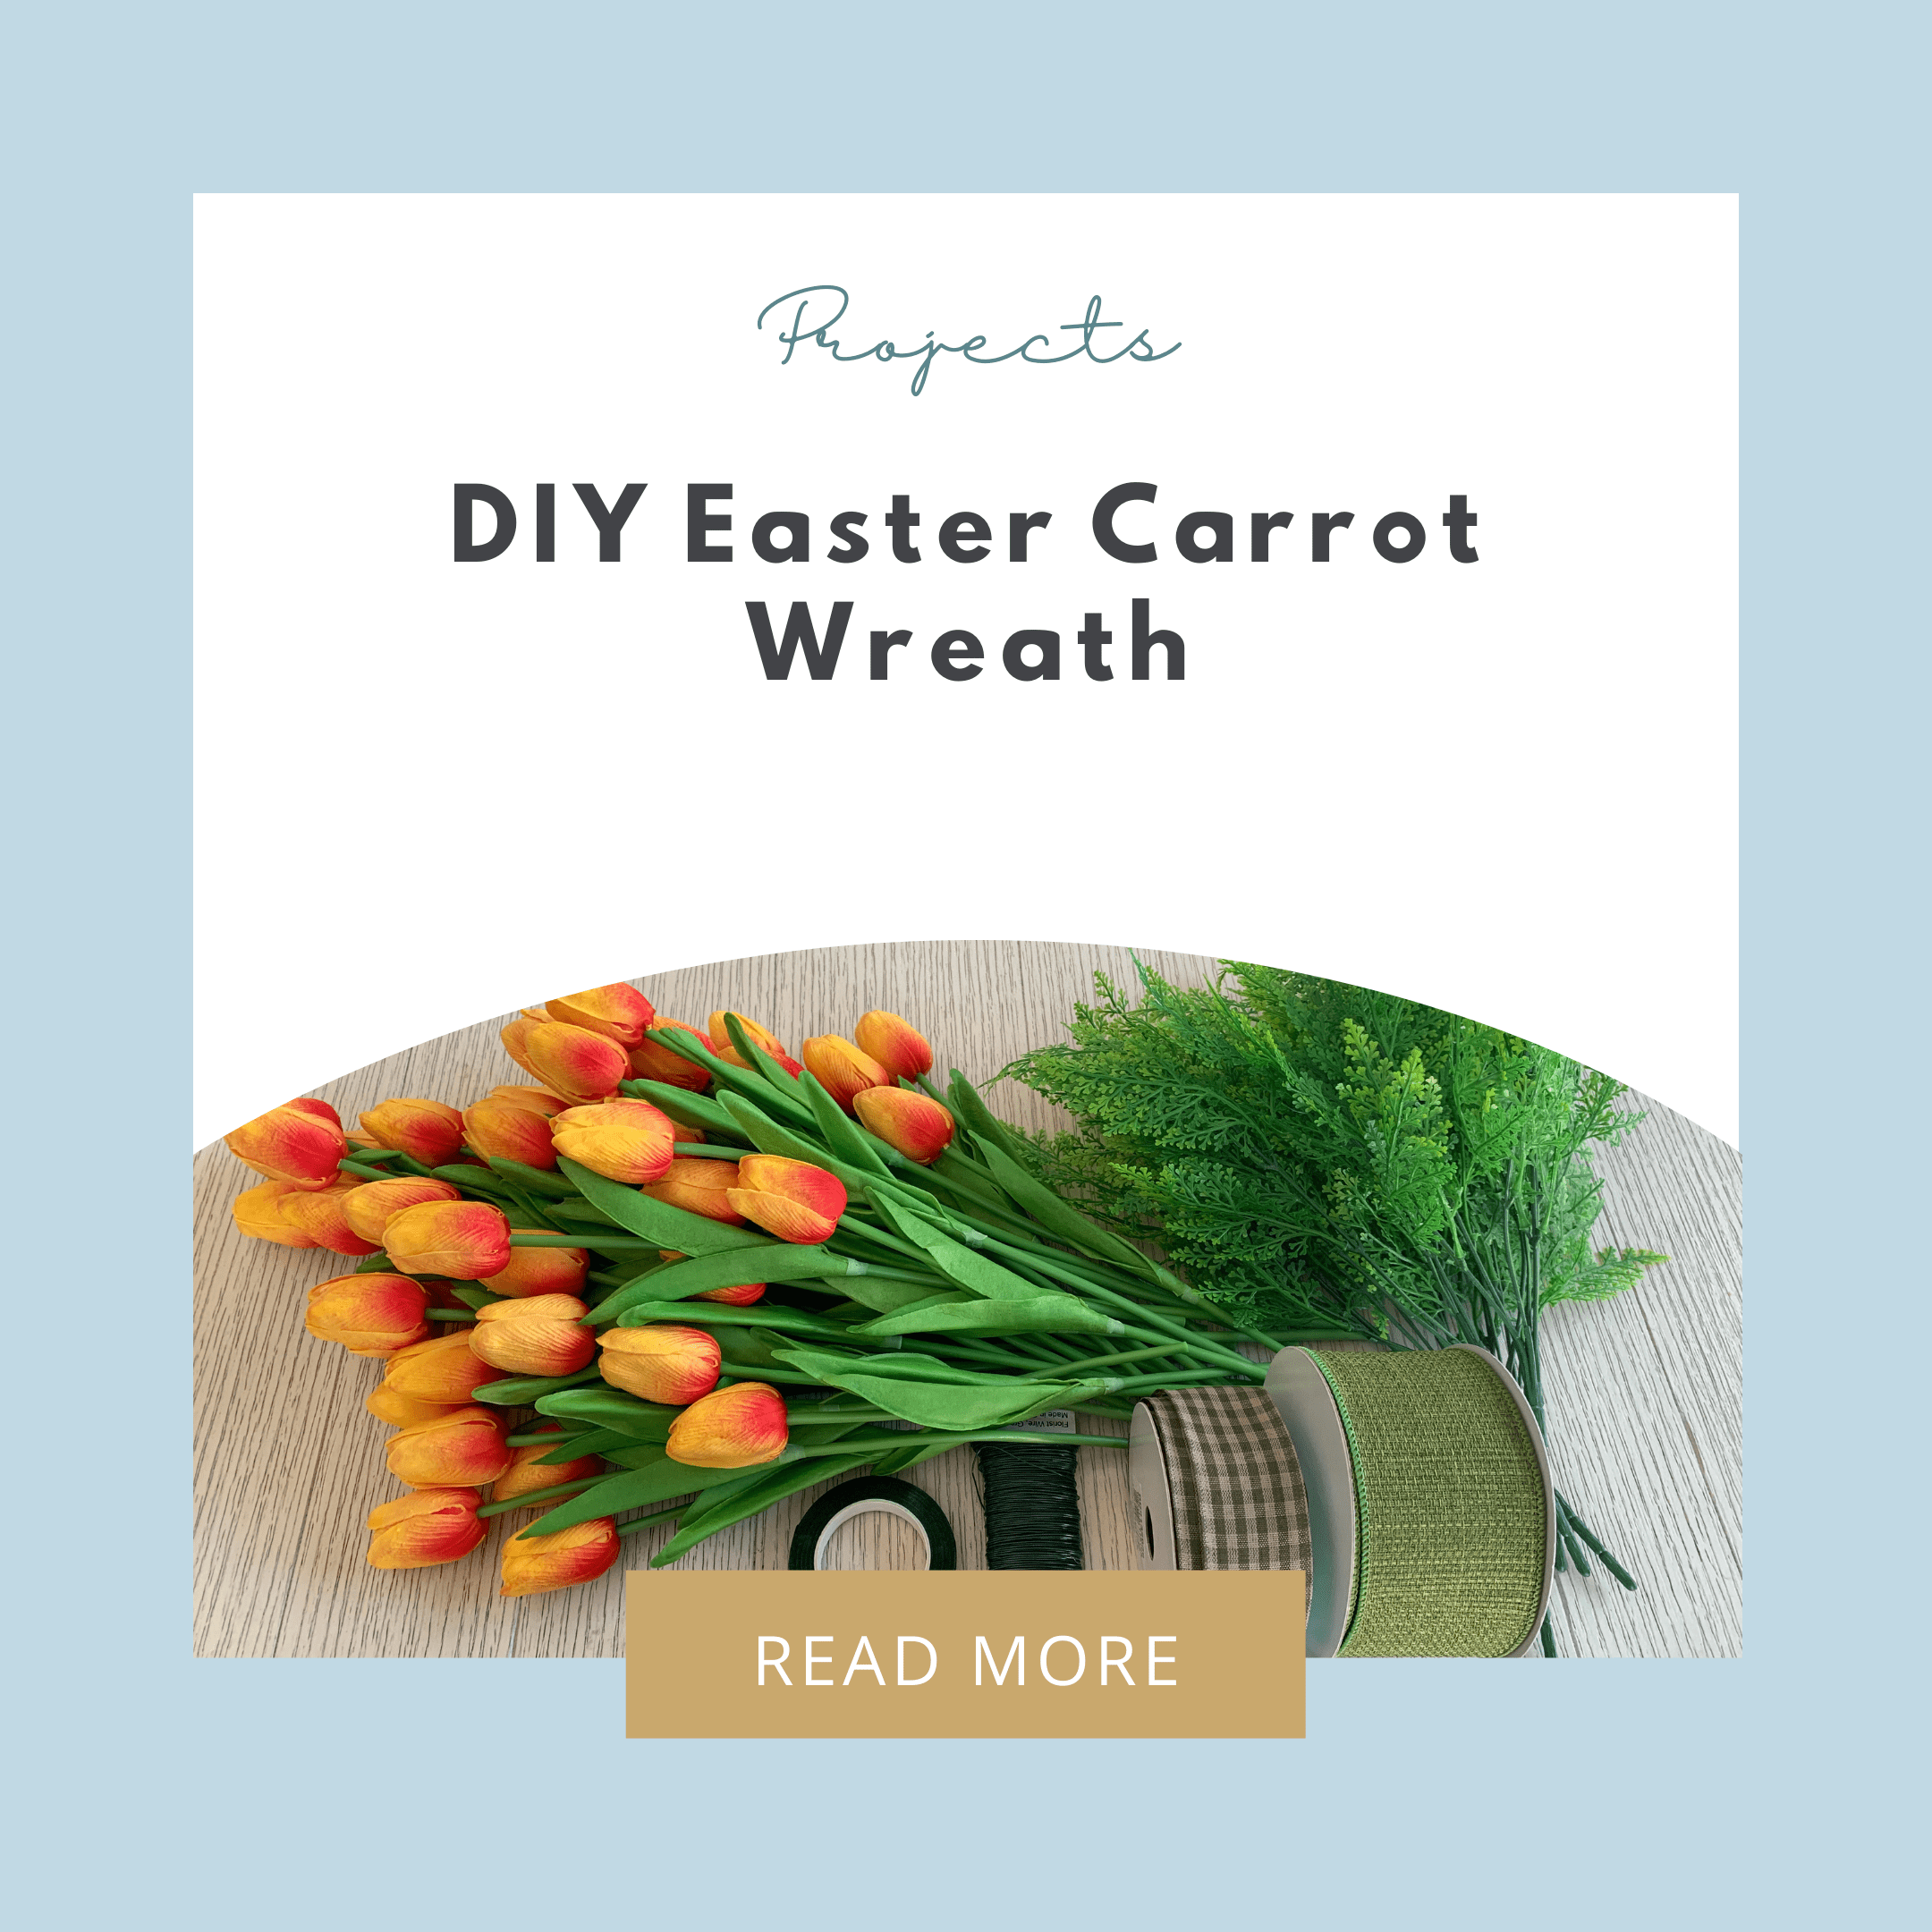 DIY Easter Carrot Wreath